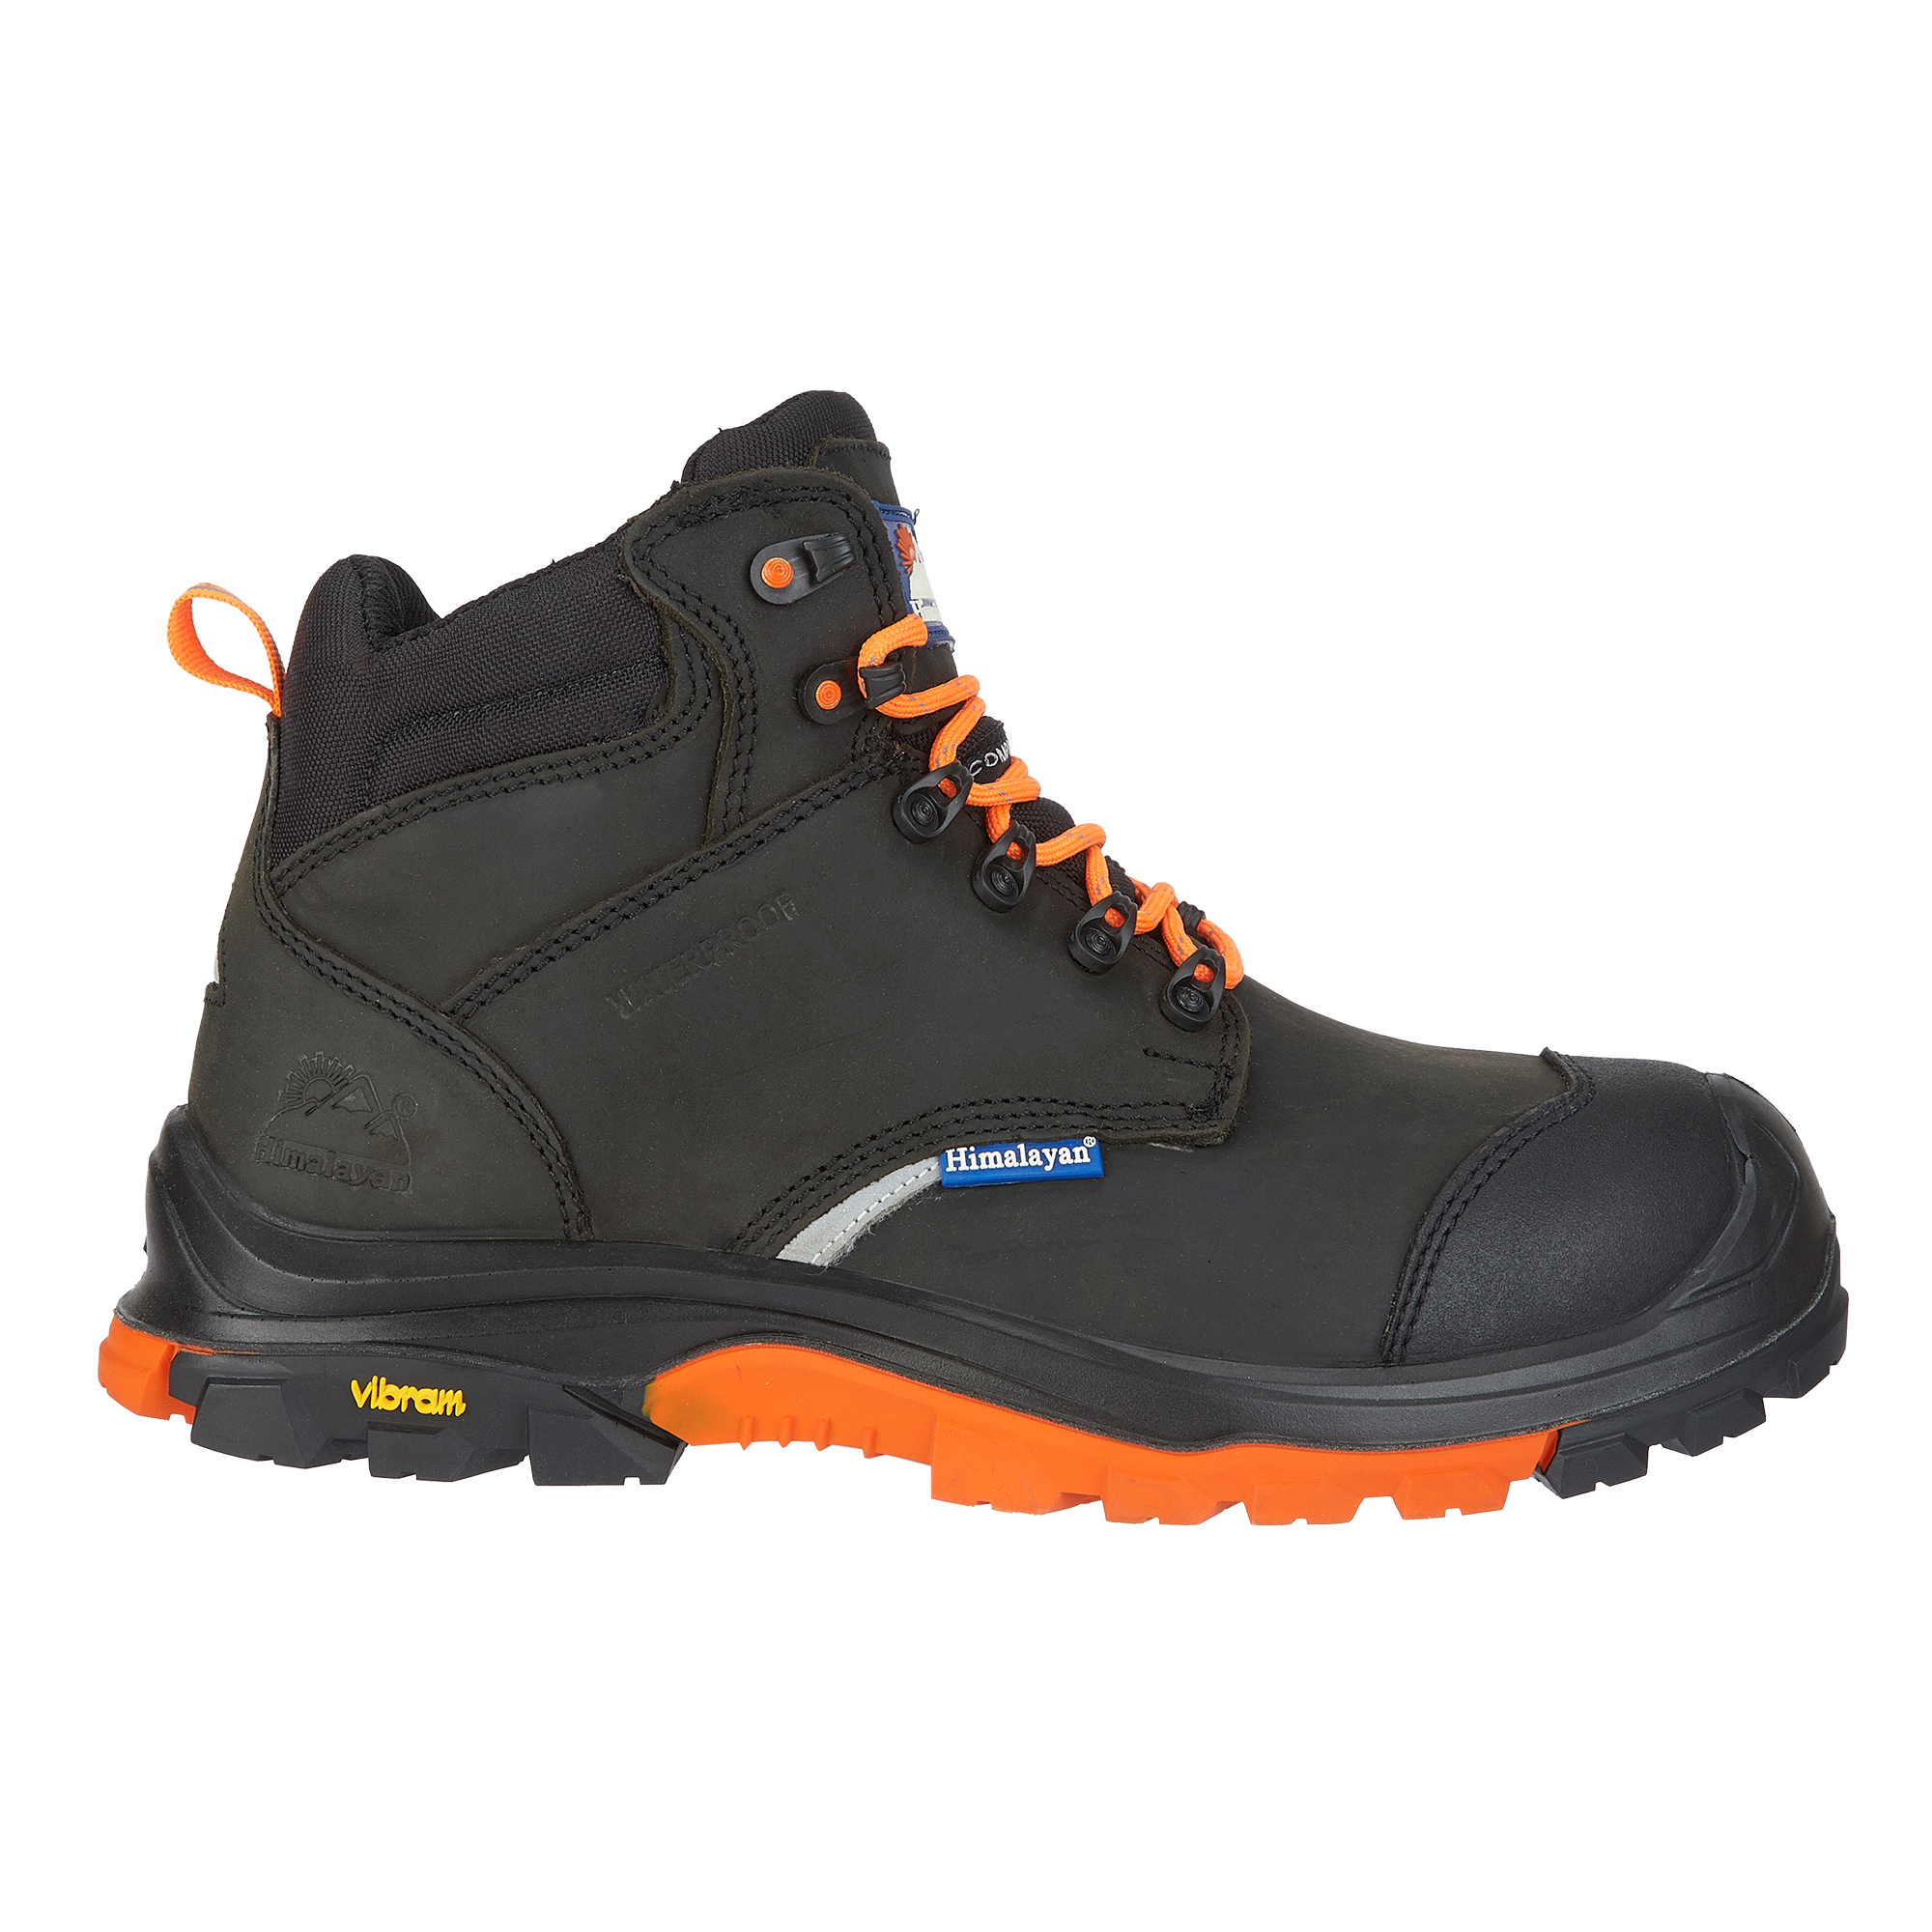 Himalayan Workwear Himalayan 5601 Vibram S3 Waterproof Safety Boot